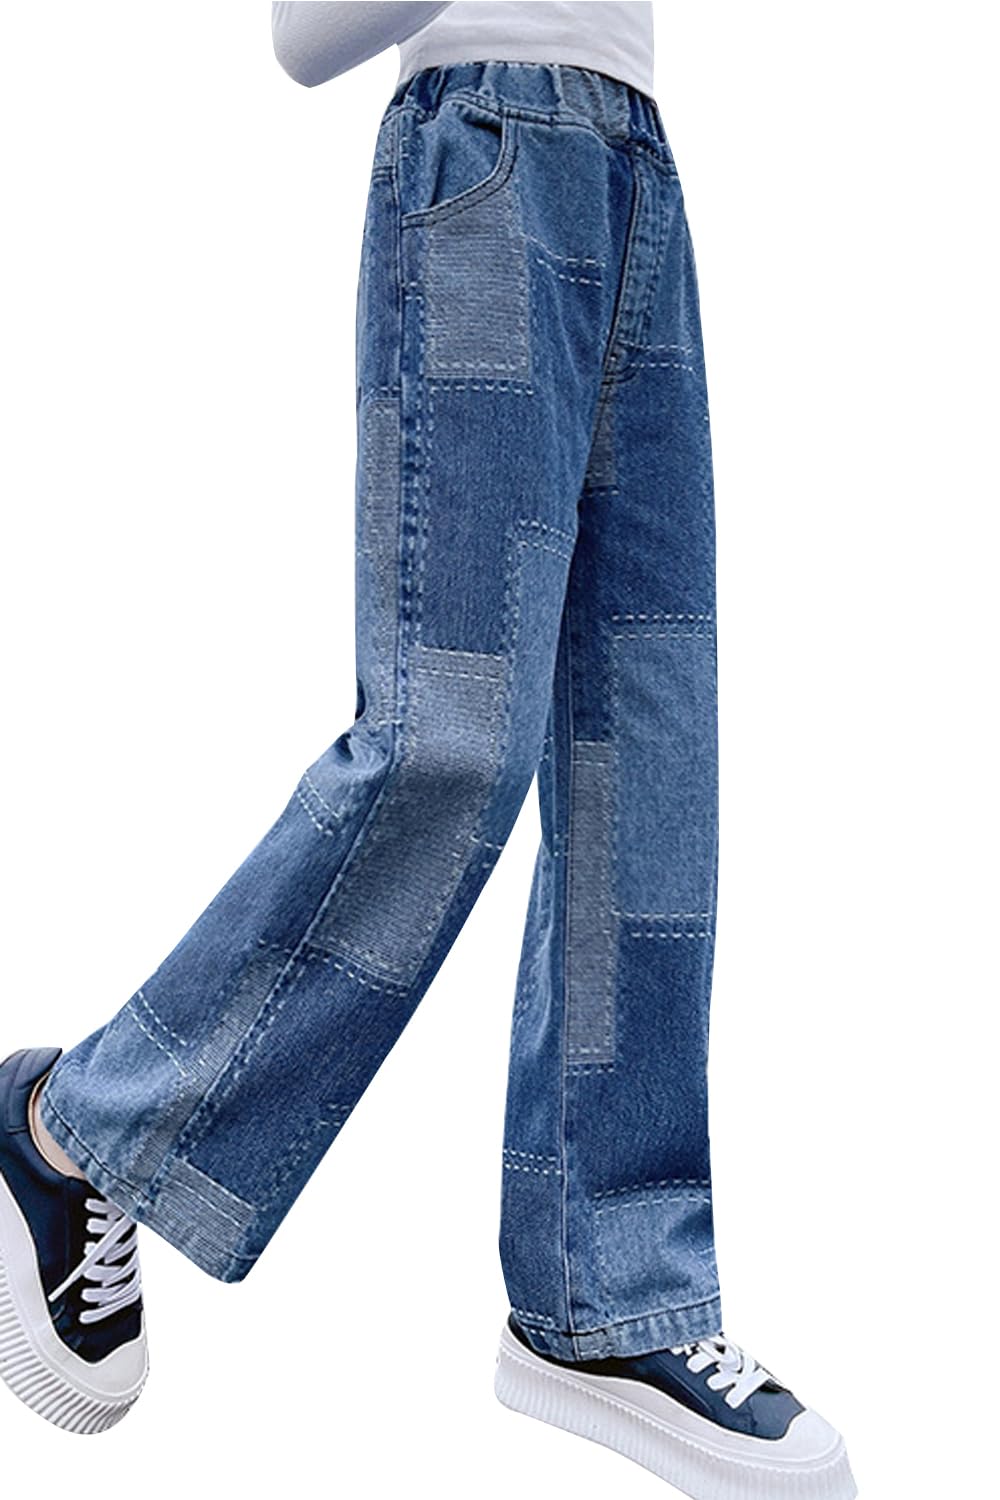 AOWKULAE Girls Jeans Elastic Wasit Wide Leg Pants Kids Jeans 6-7Years